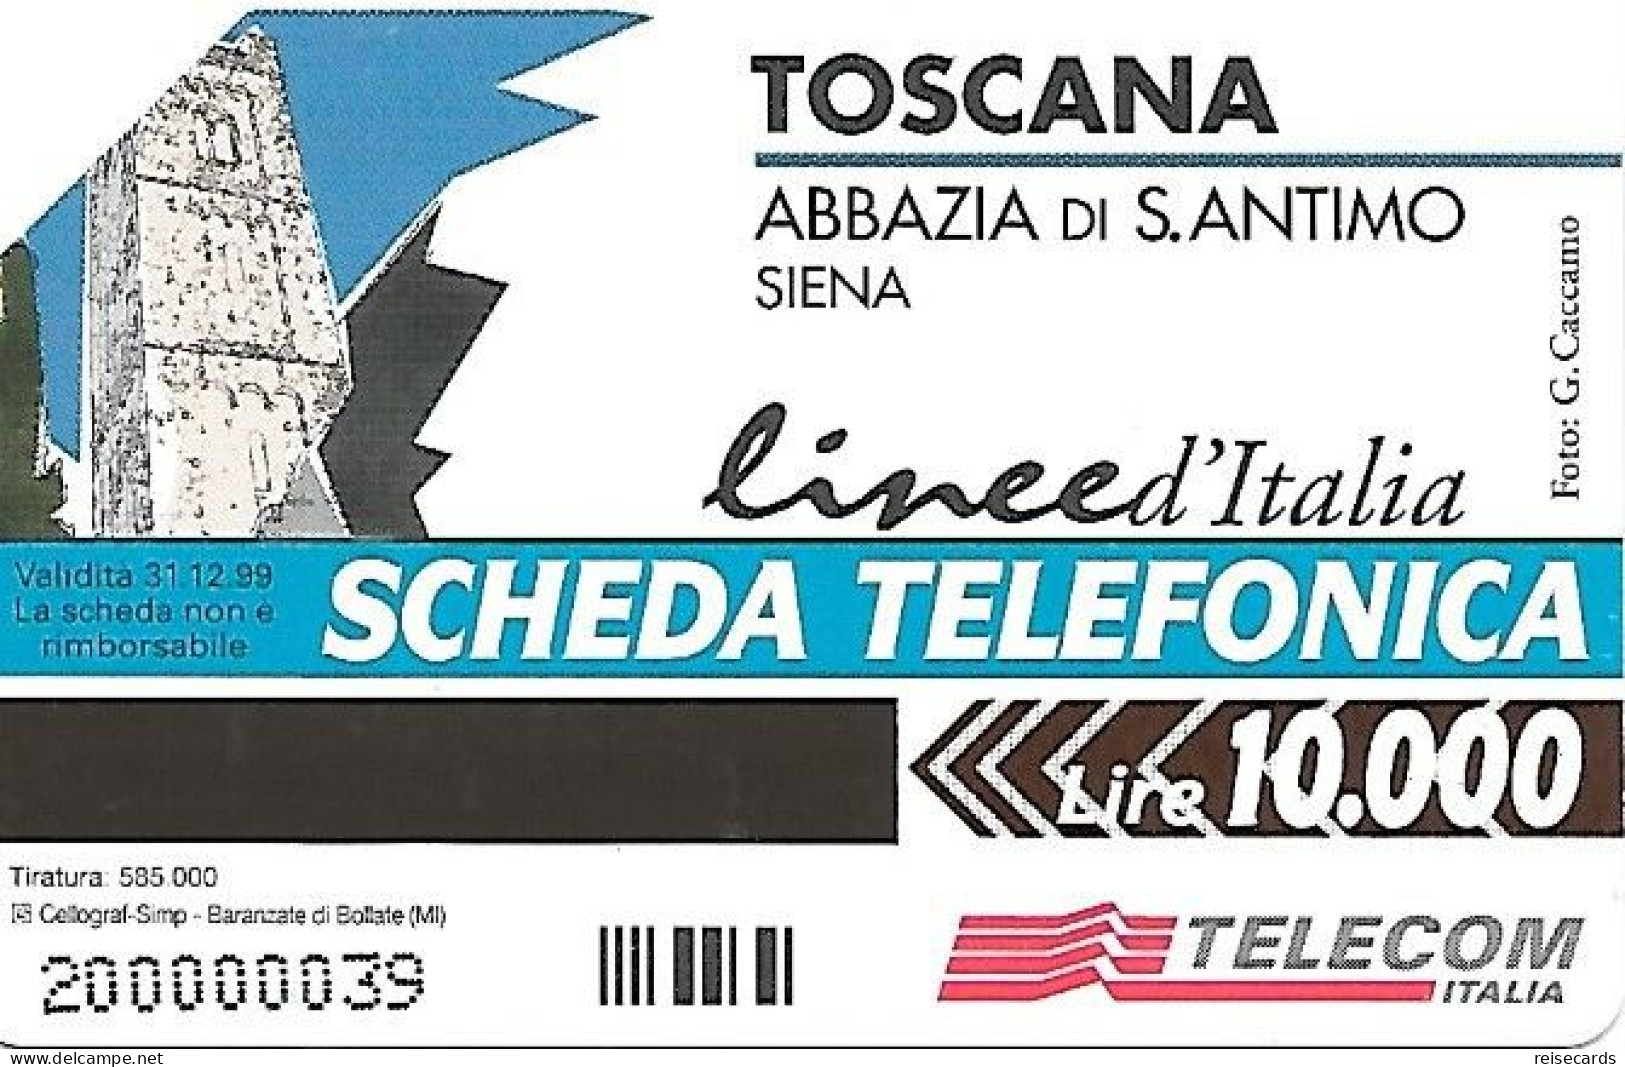 Italy: Telecom Italia - Toscana, Abbazia Di Santimo, Siena - Publiques Publicitaires